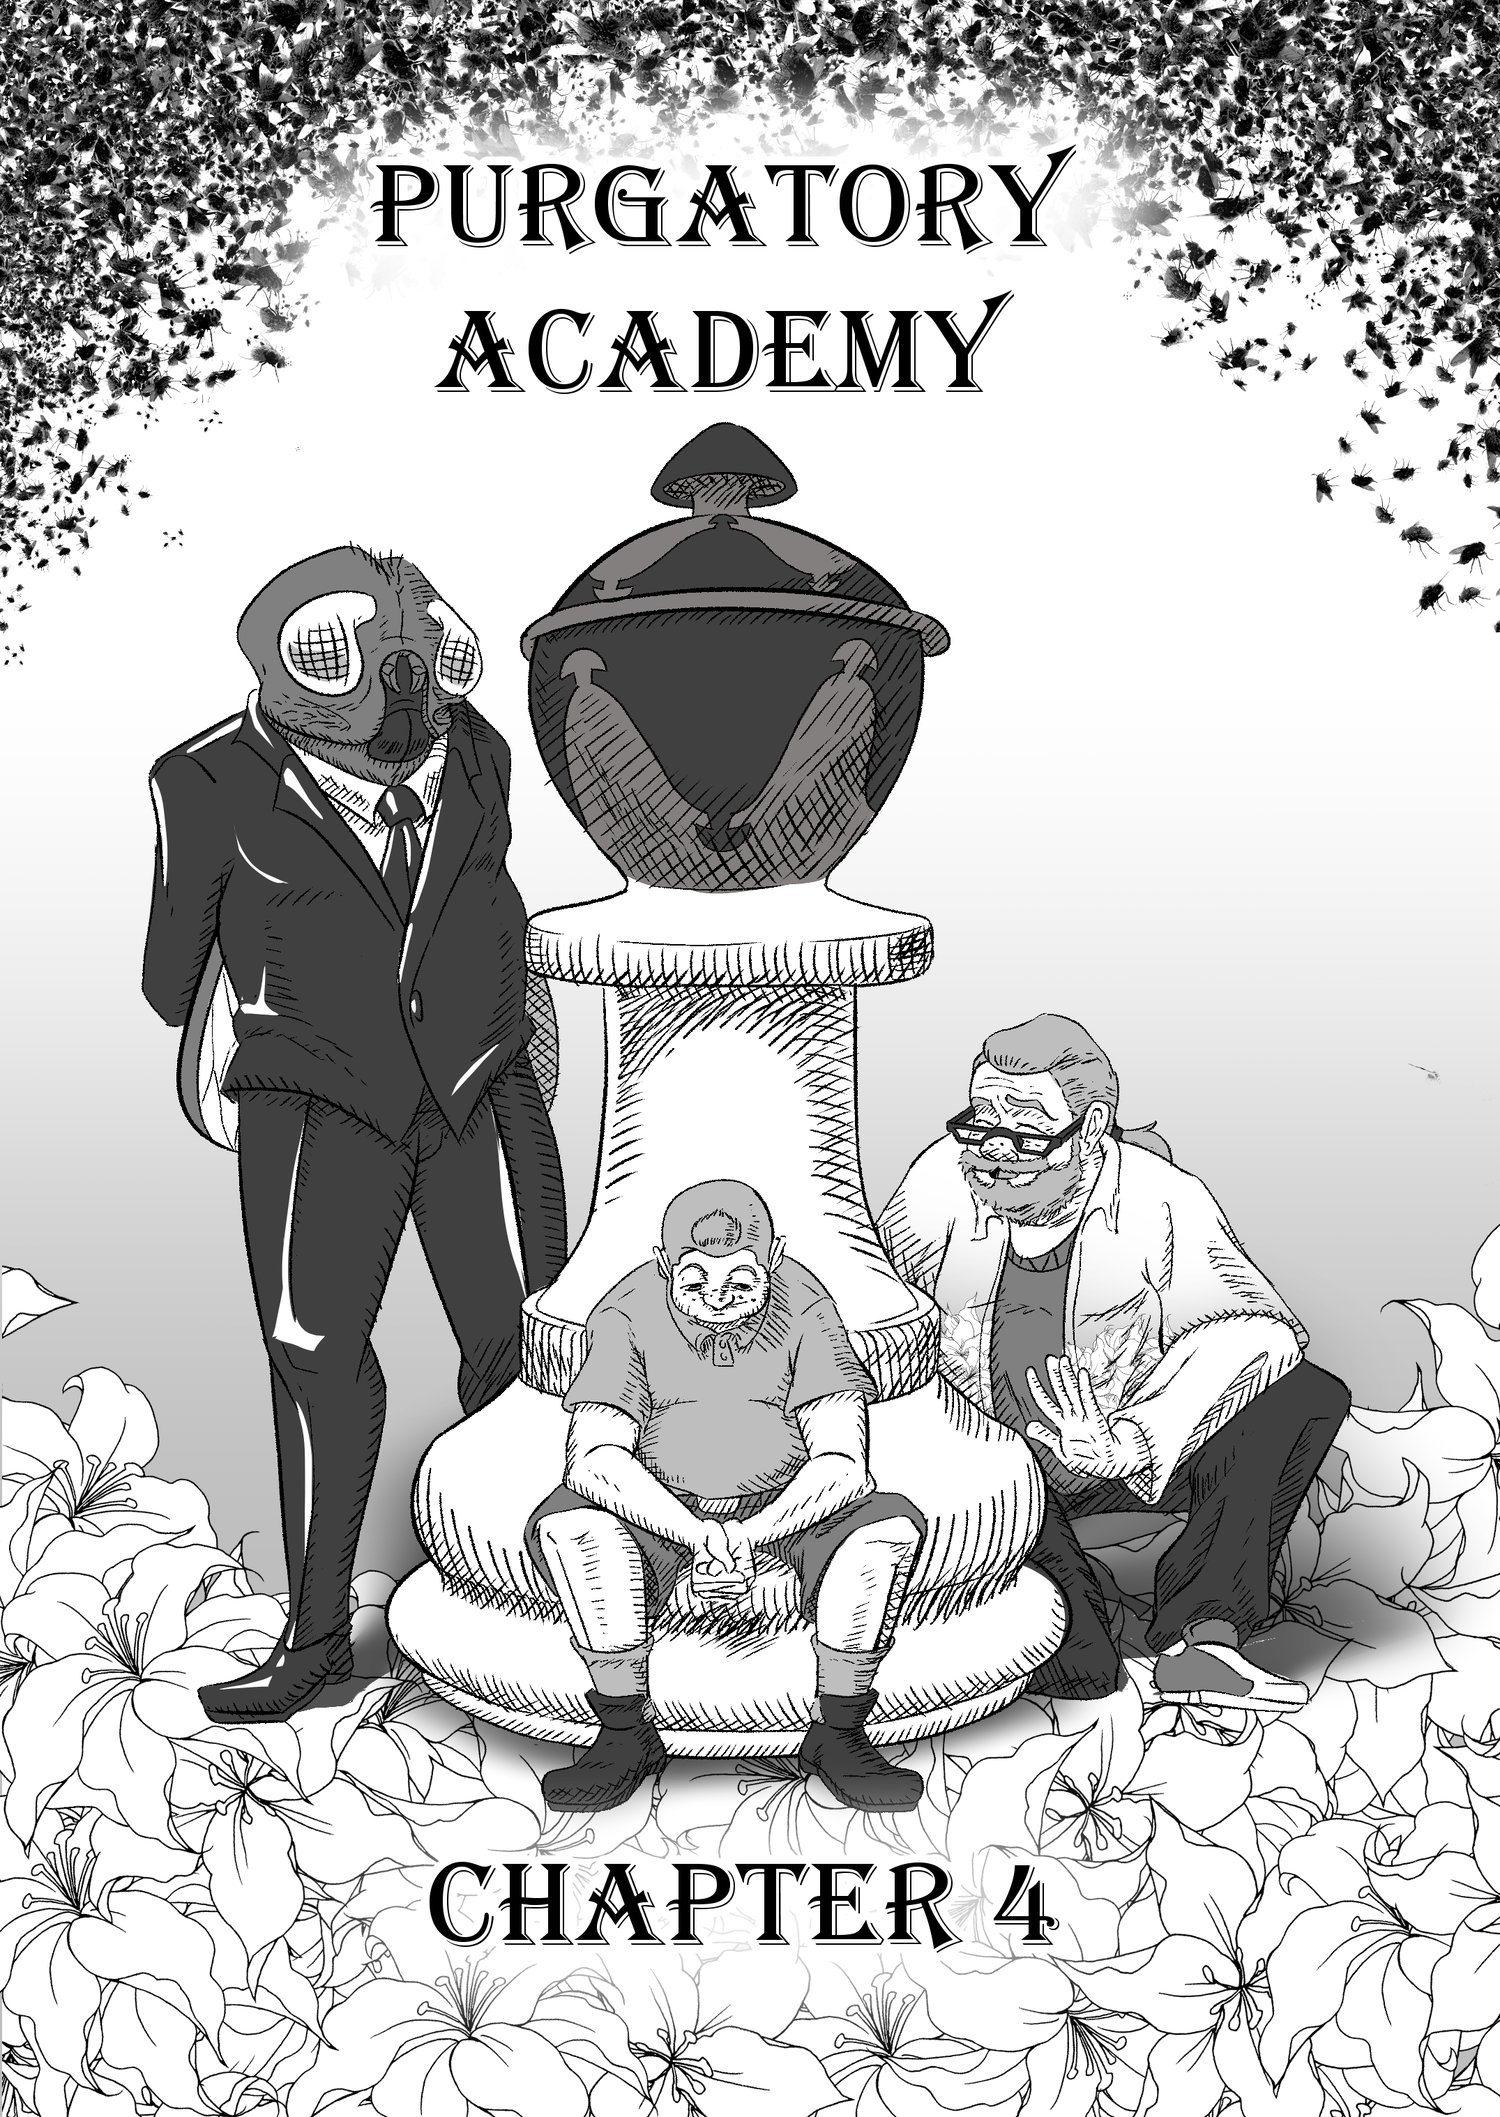 Studio Masonimous -  Purgatory Academy - comics online - A Friendly Face 2.4.1